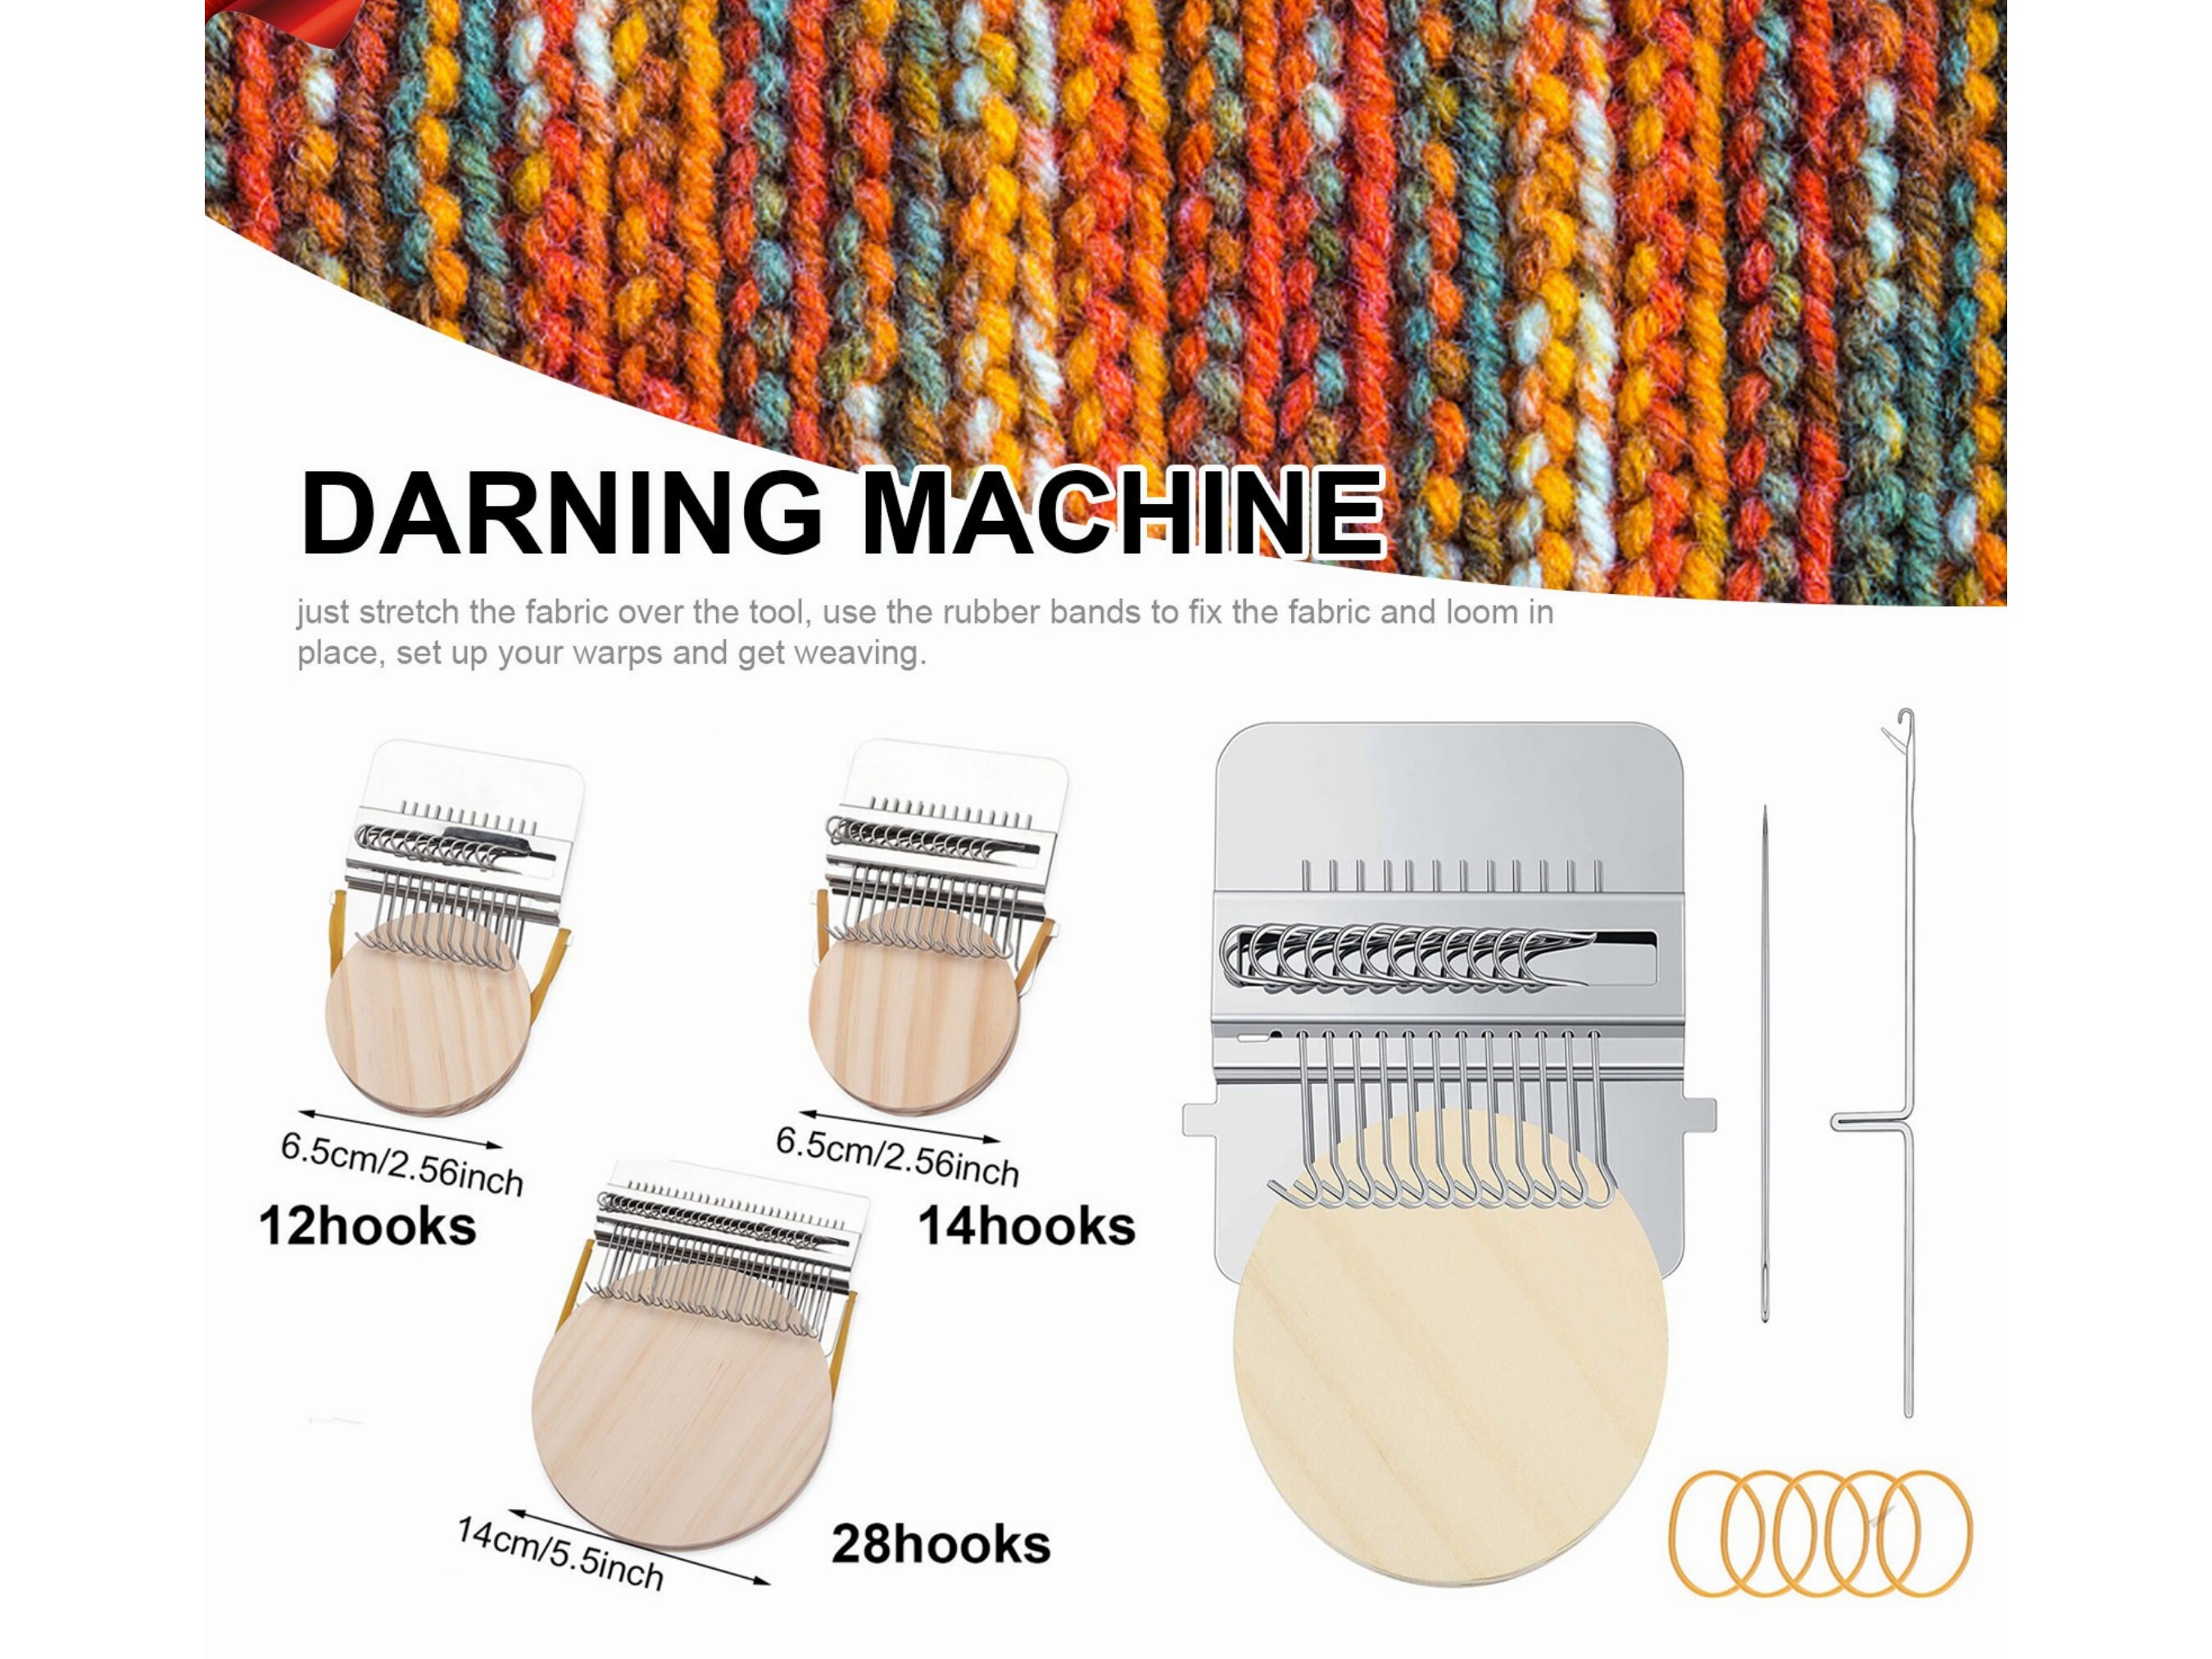 Wooden Darning Mini Loom Machine, Speedweve Sock Darning Thread Tool Kit,  Darning Mushroom Egg for Mending, Complete Darning Kit with Instructions  DYI by AMZ Elite